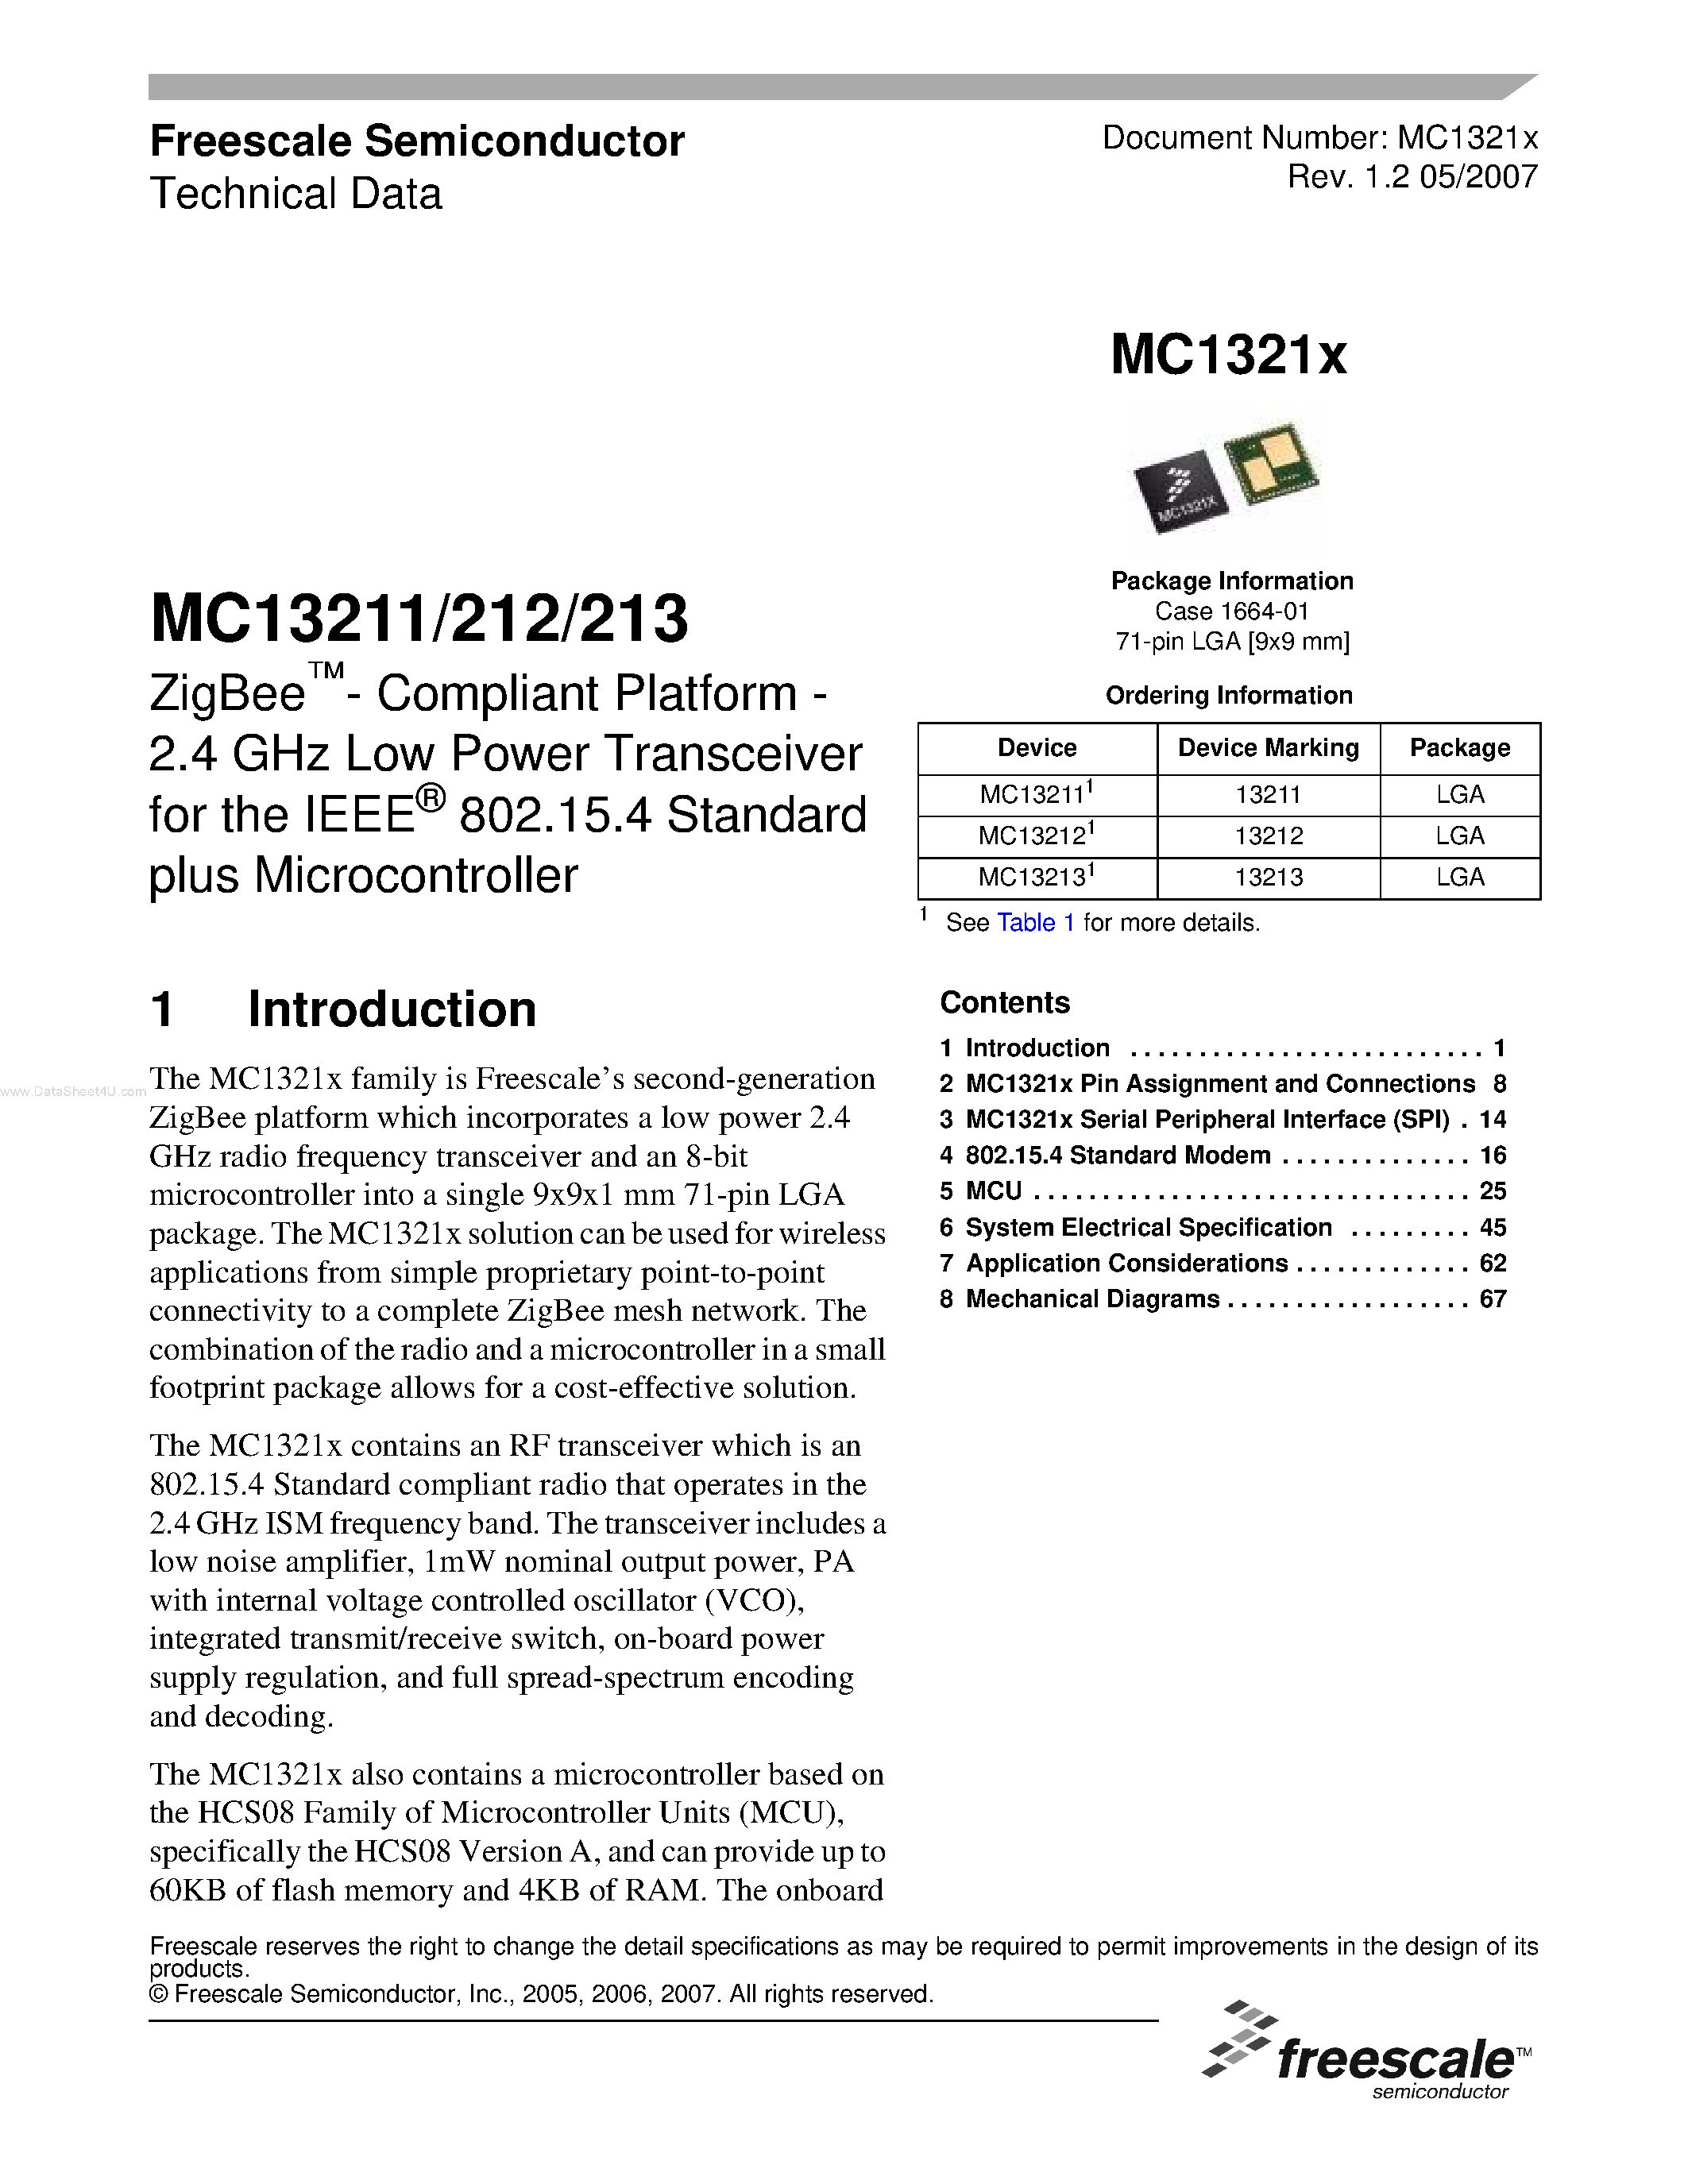 Даташит MC13211 - 2.4 GHz Low Power Transceiver страница 1